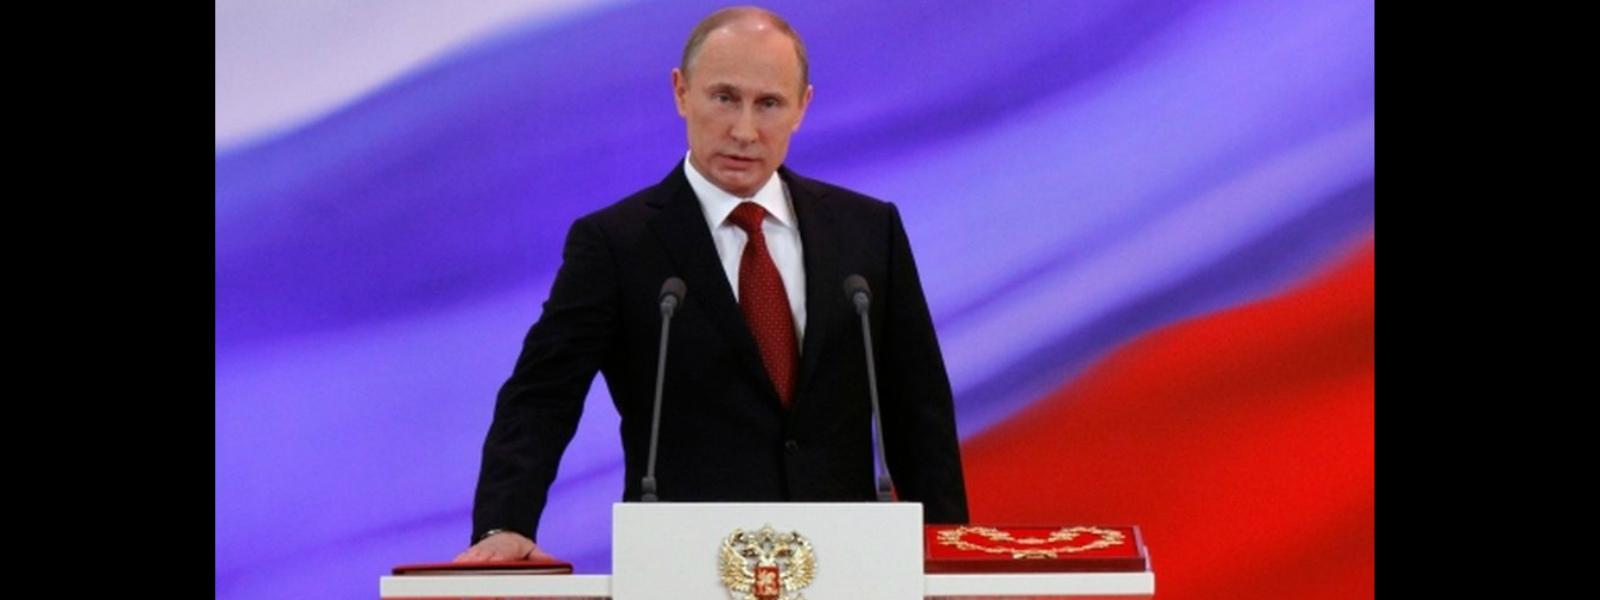 Putin sworn in as president for fourth term